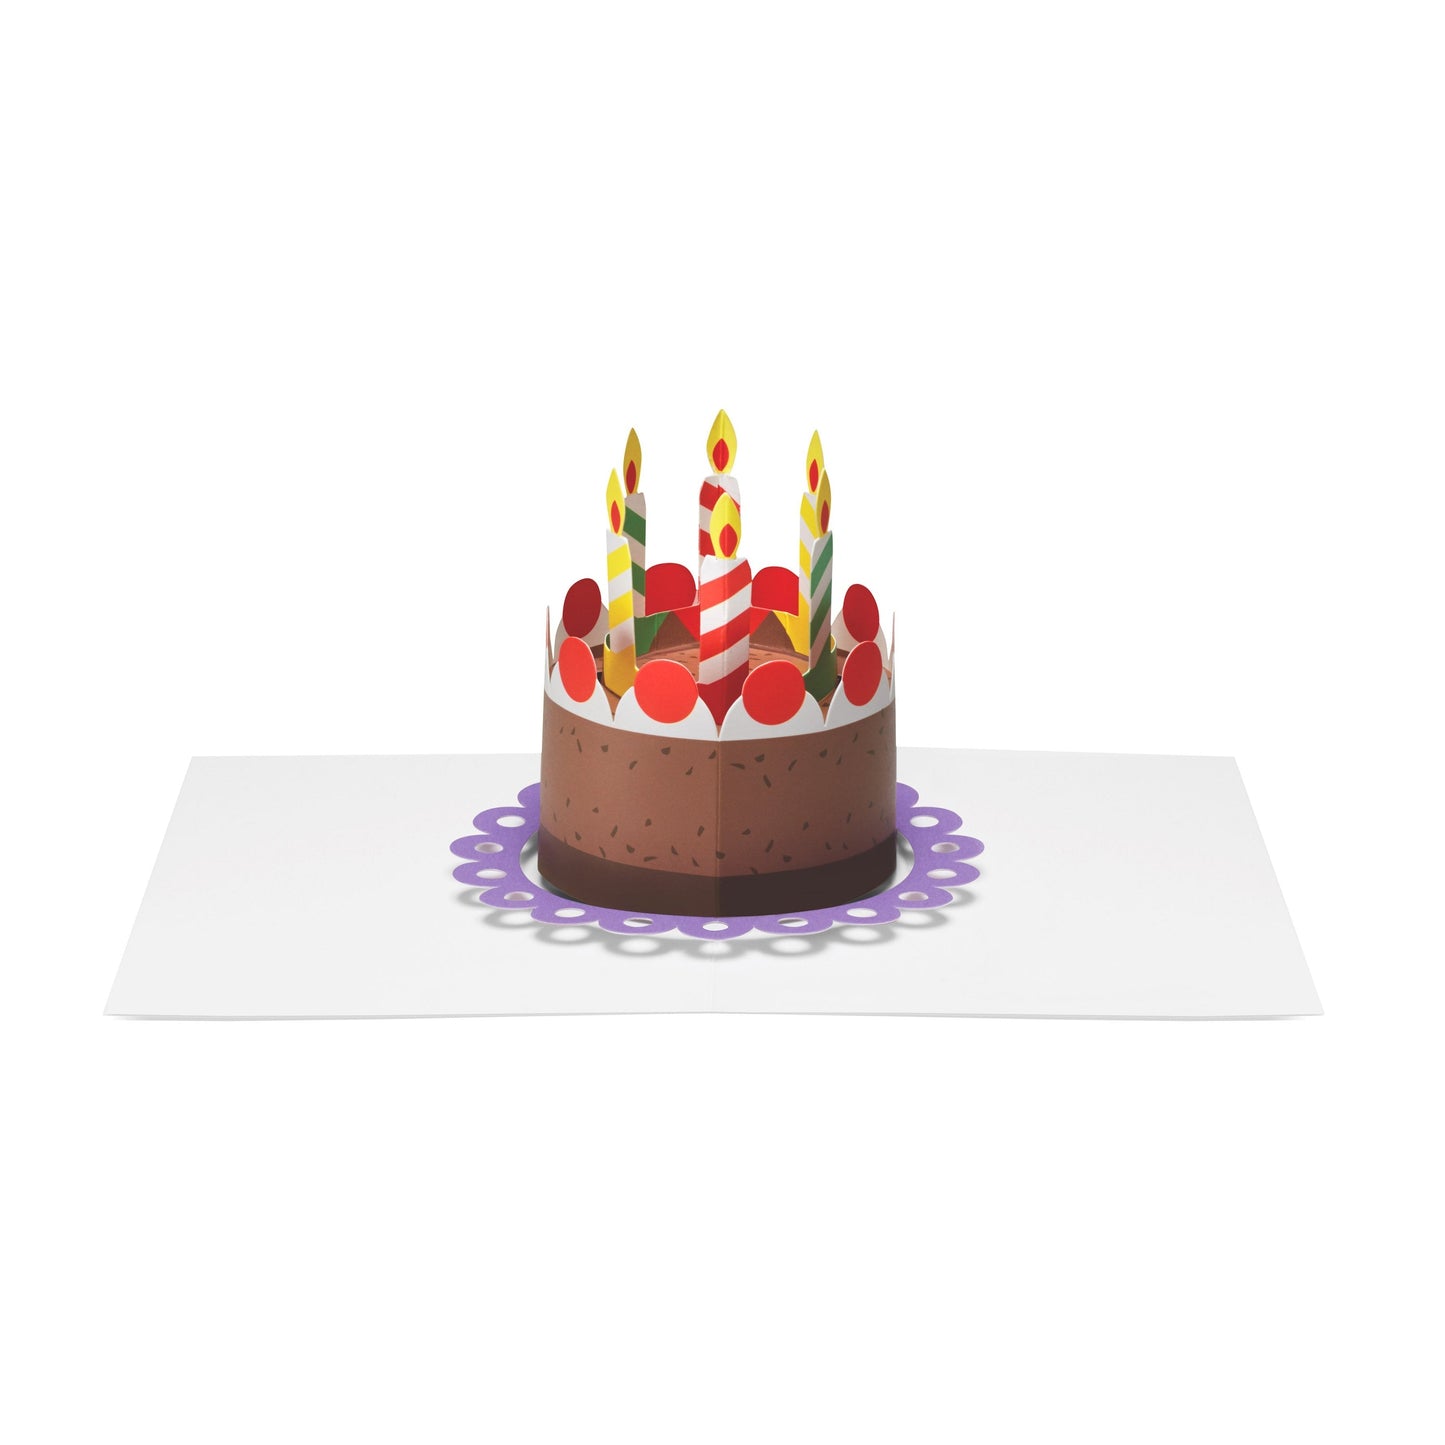 Pop-up Greeting Card: Cake